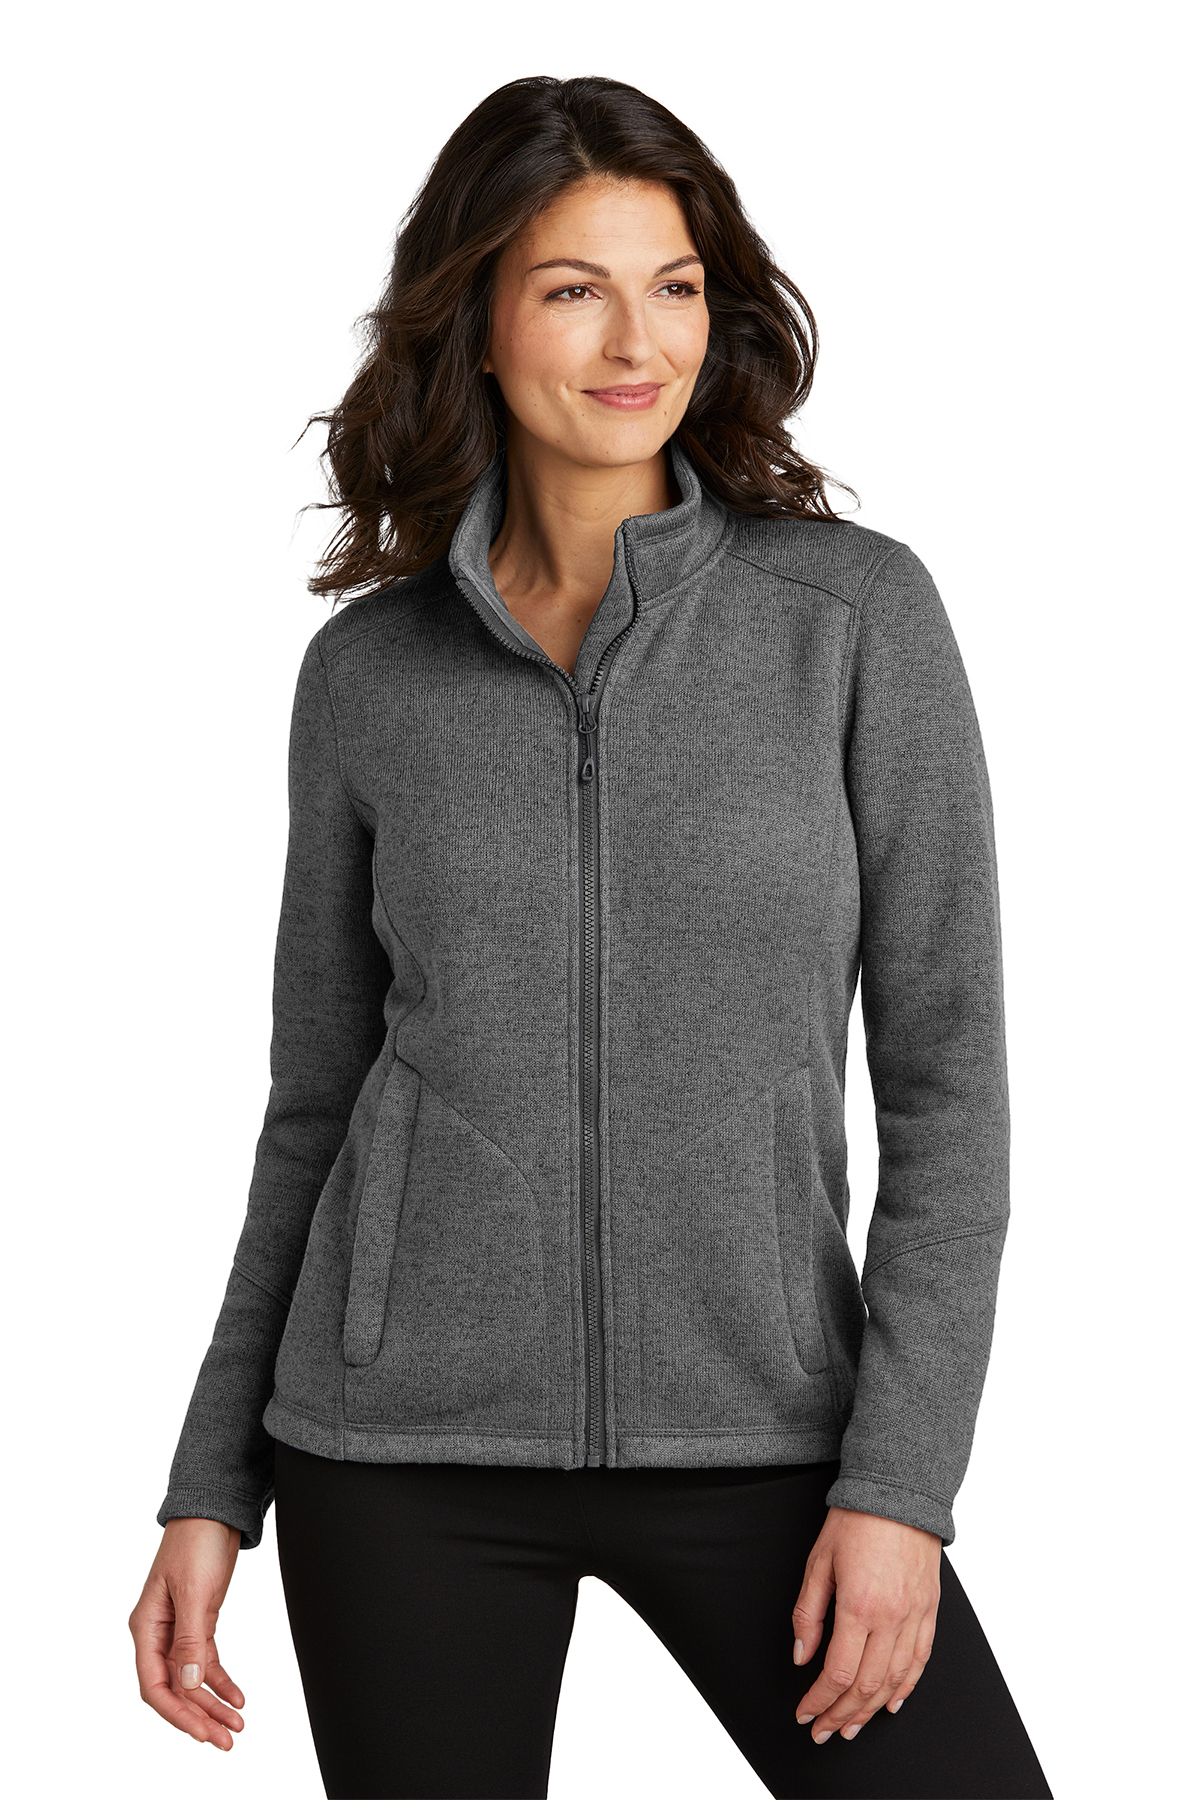 Port Authority L425 Womens Long Sleeves Arc Sweater Fleece Long Jacket